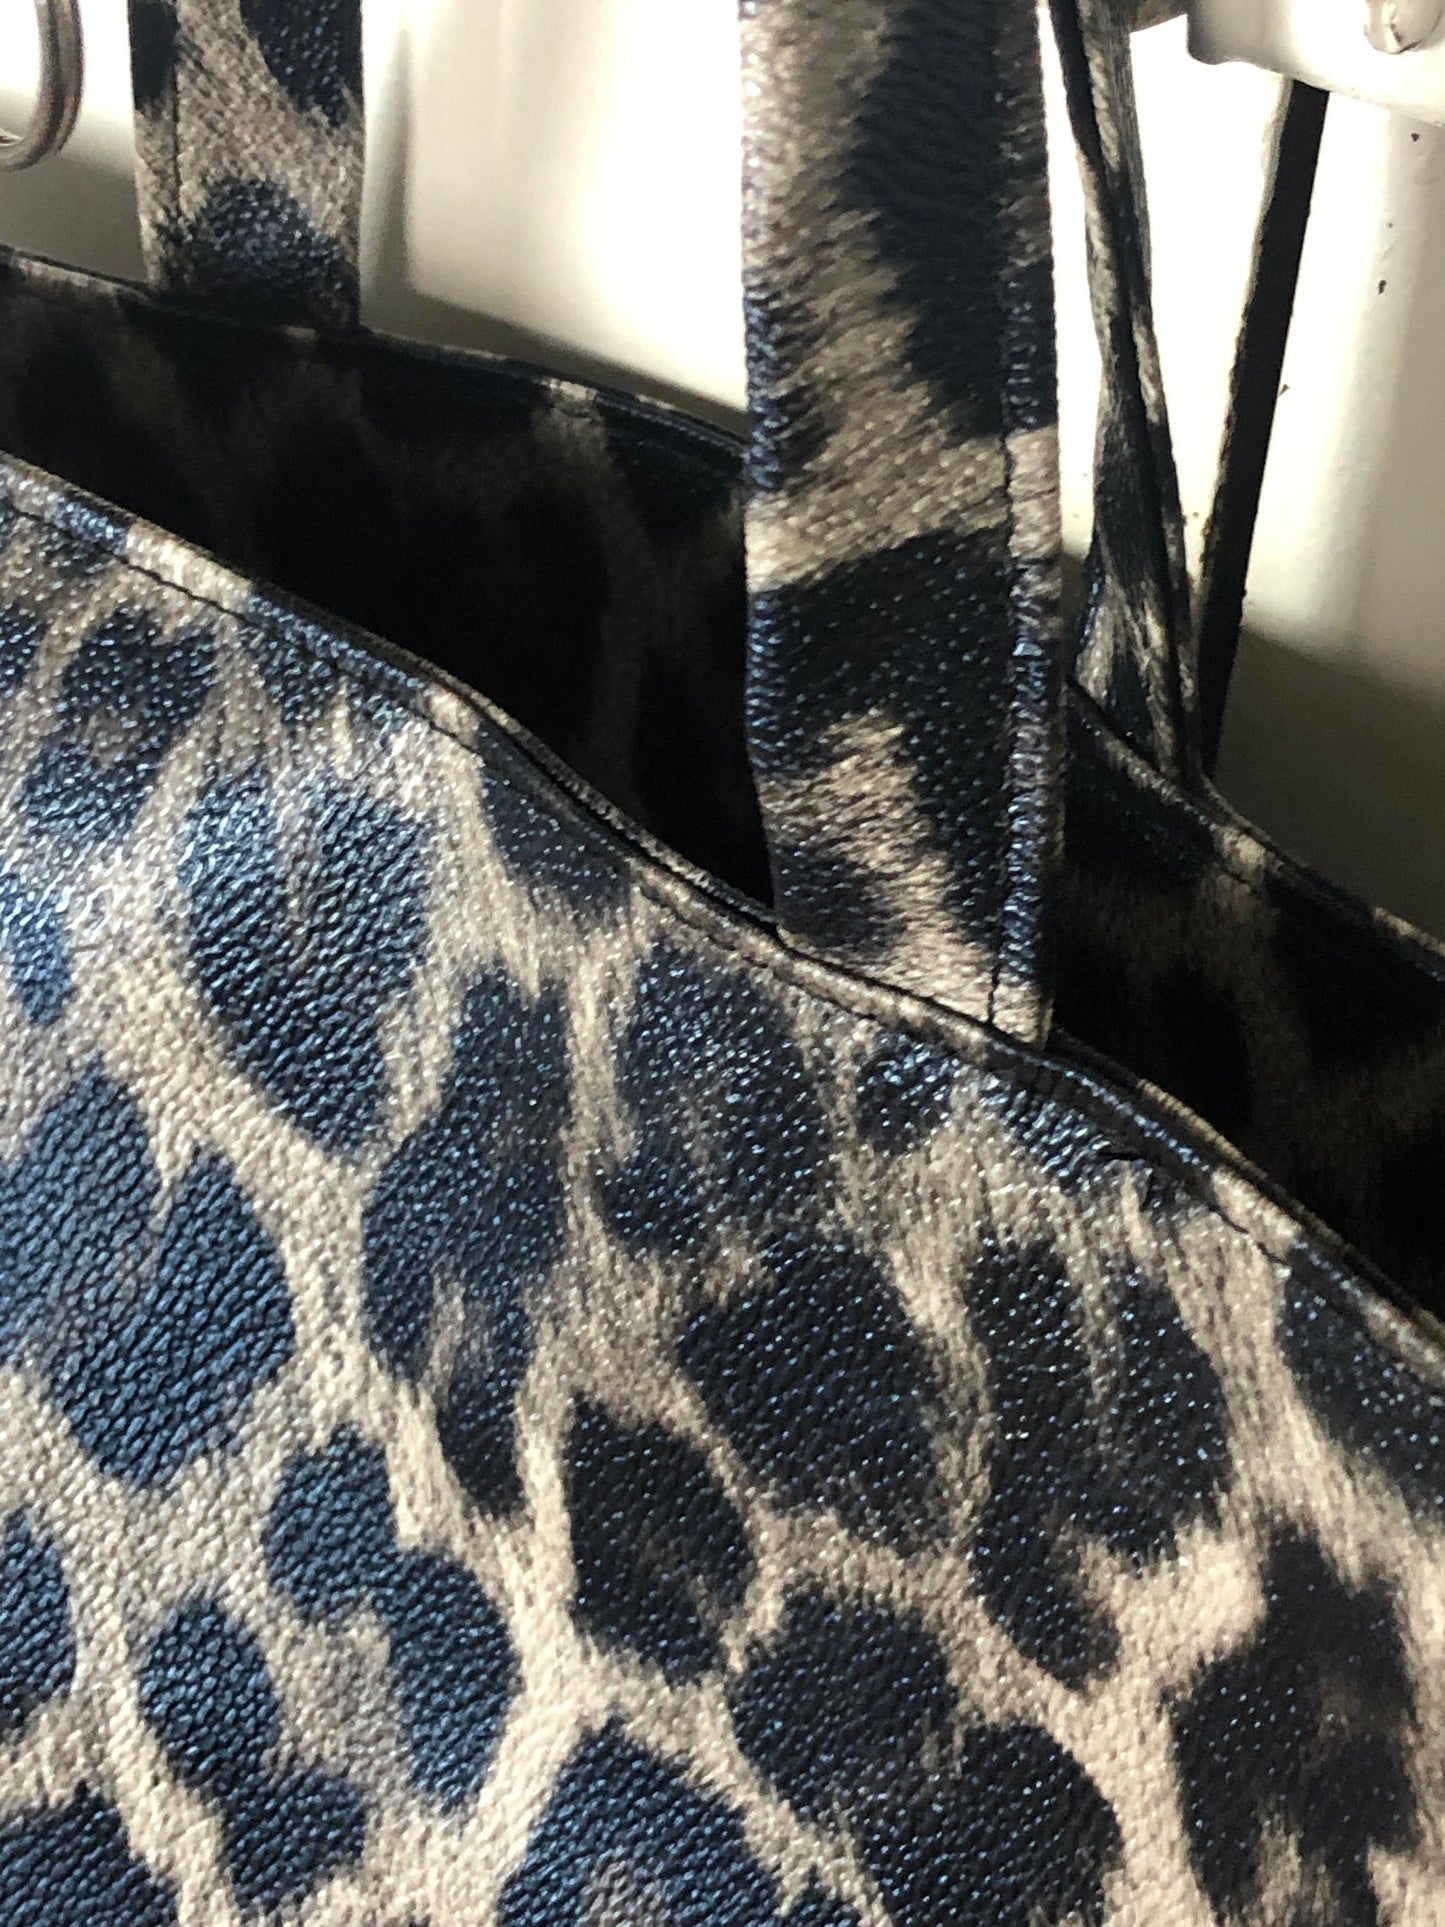 Faux leather leopard print tote bag